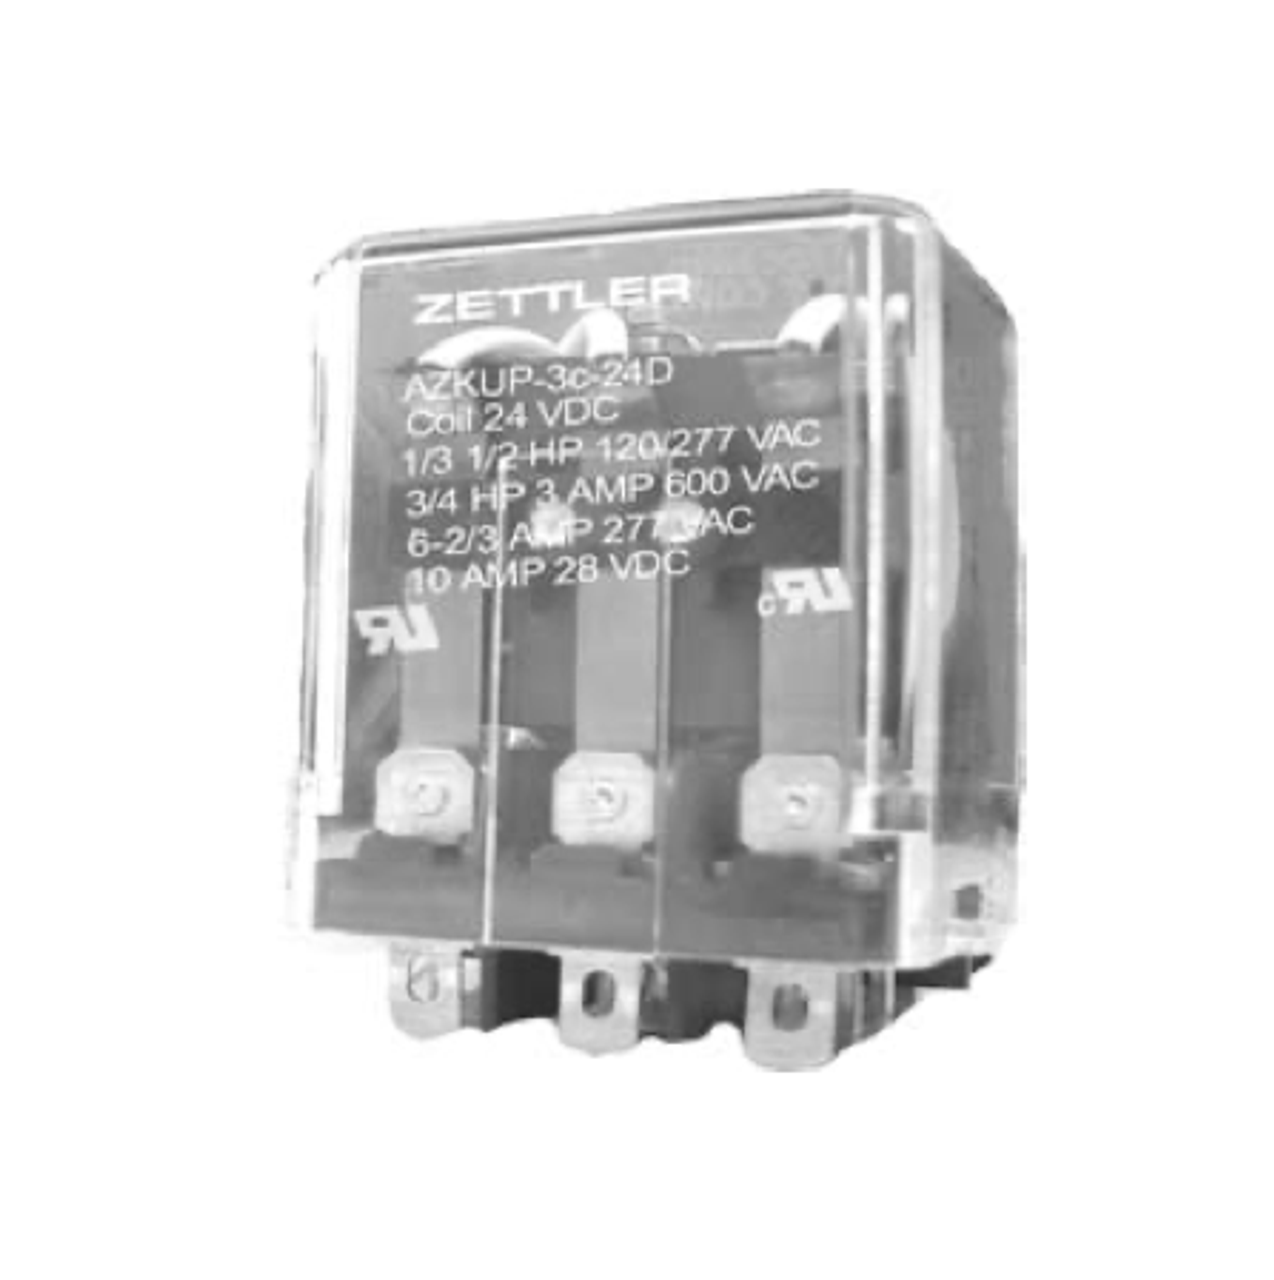 American Zettler AZKUP-1C-110D Power Relay